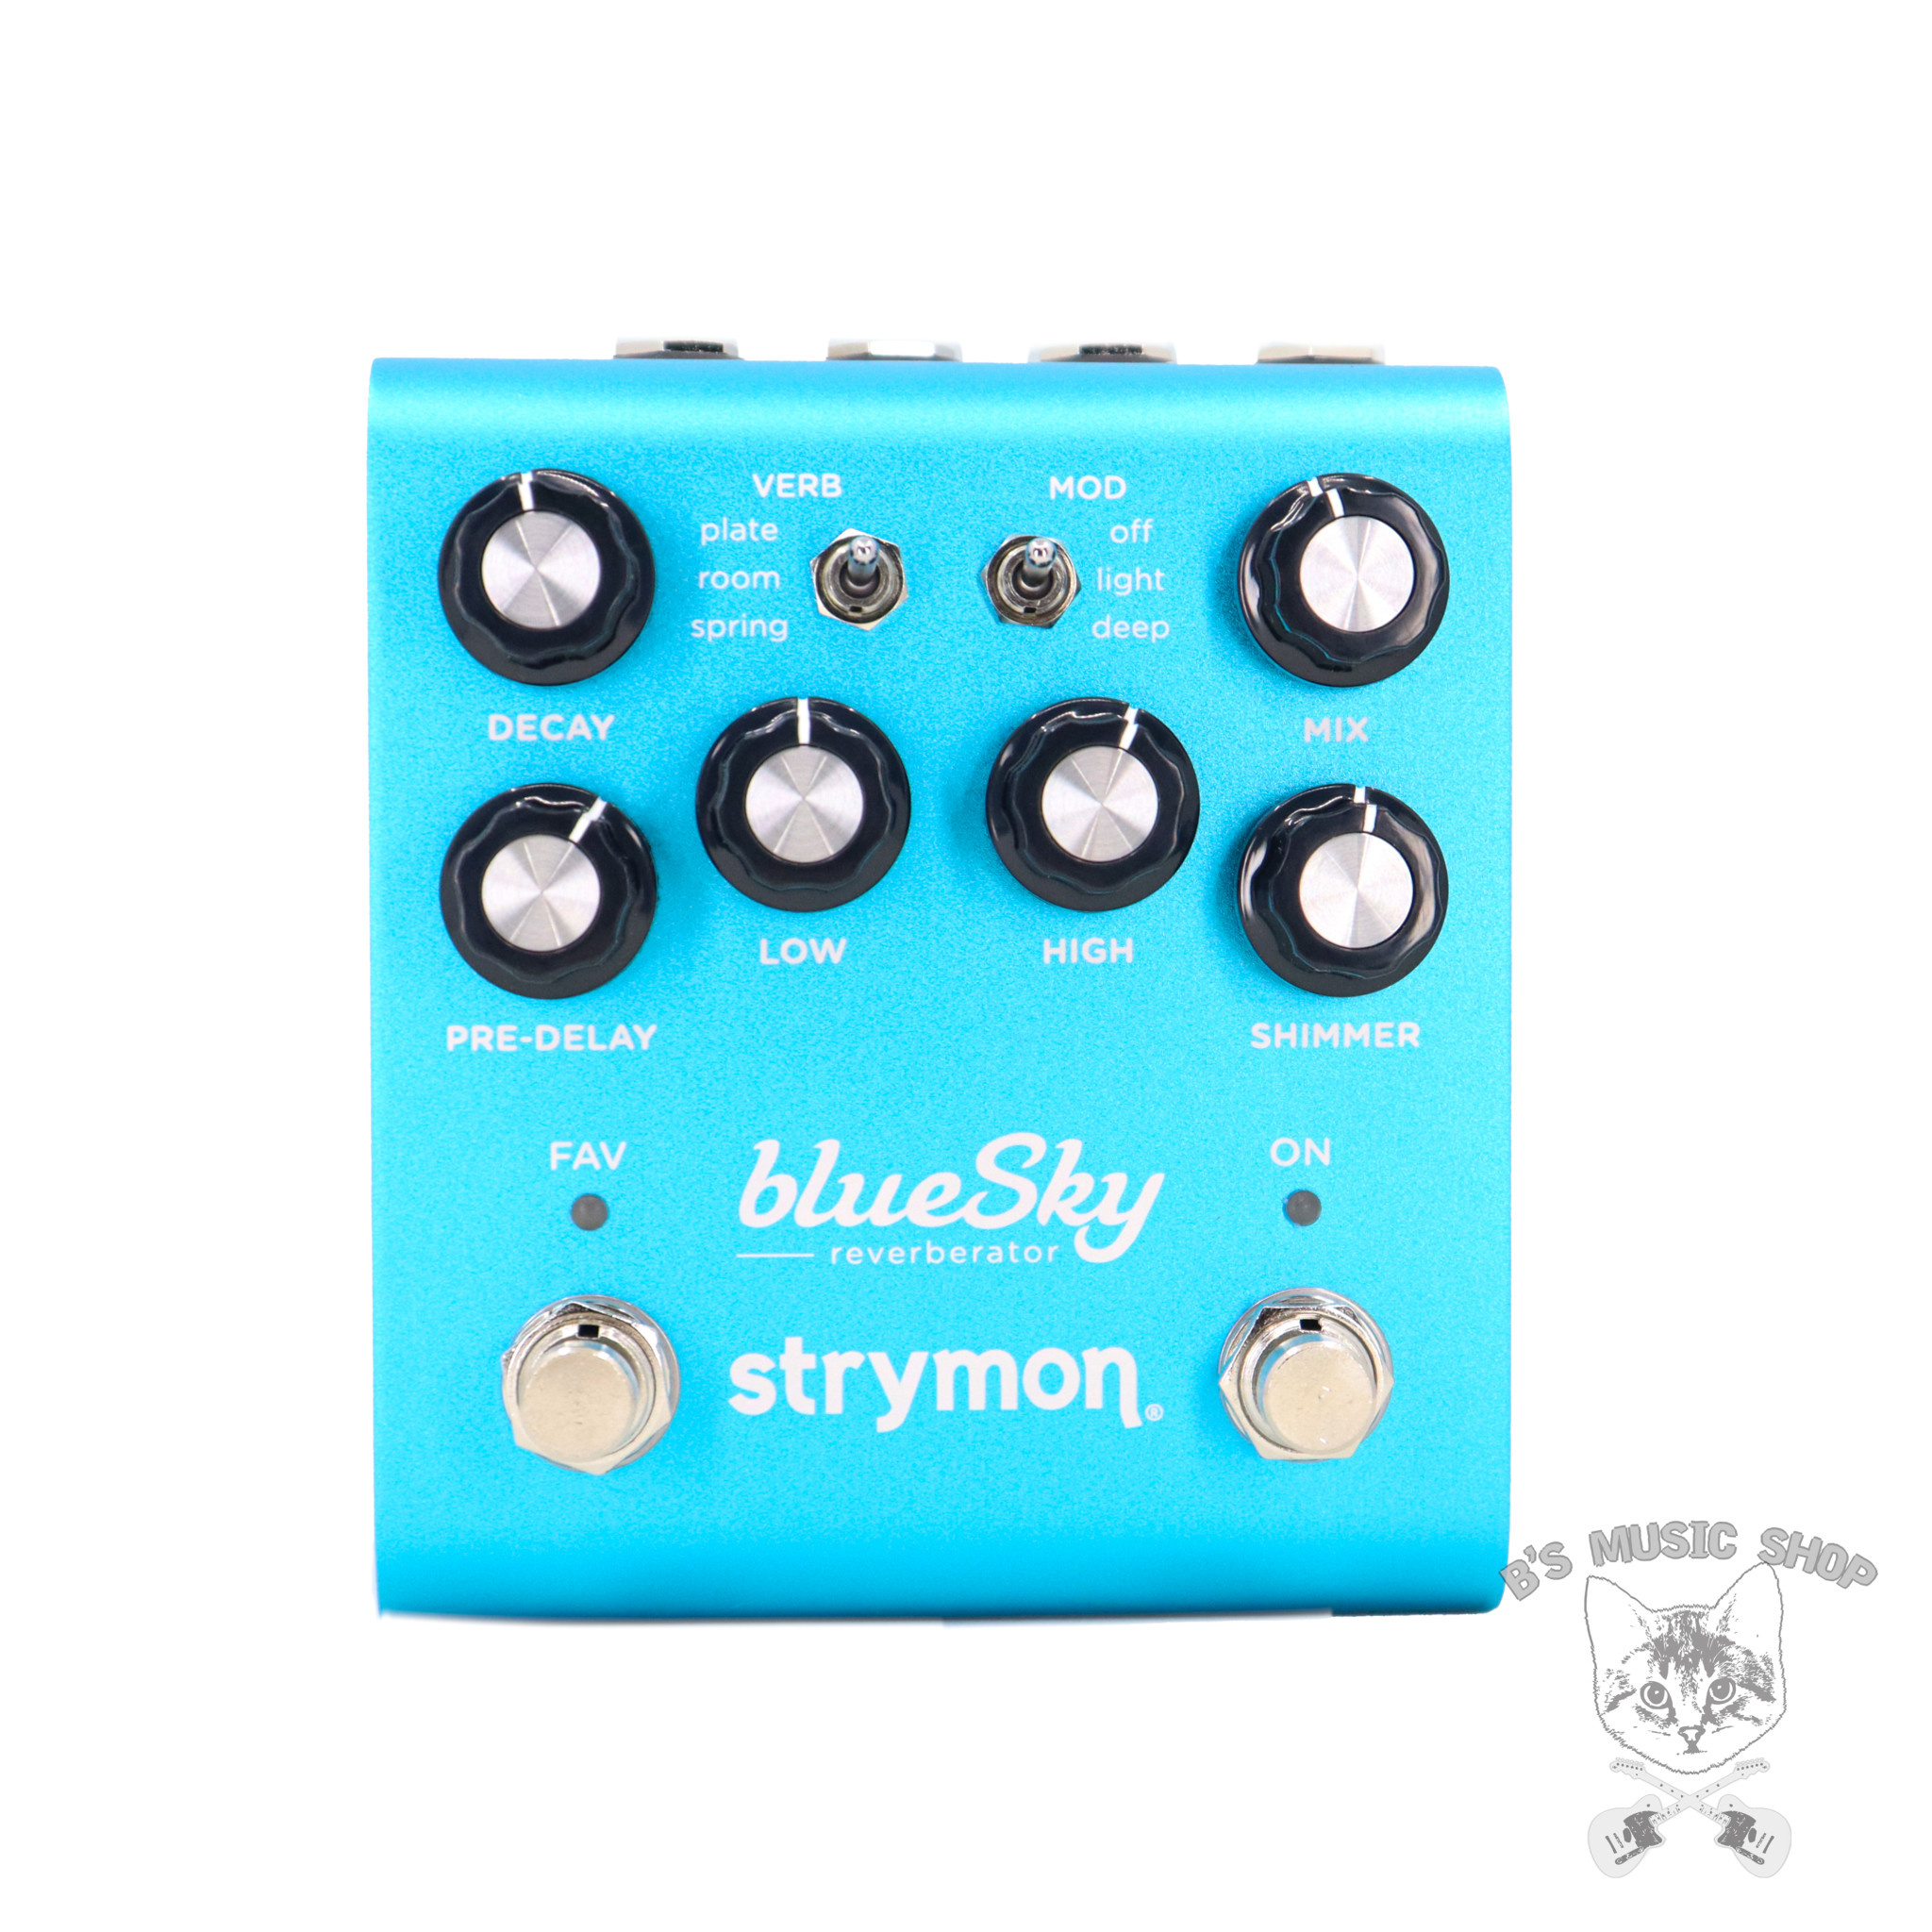 Strymon blueSky V2 Reverb - B's Music Shop